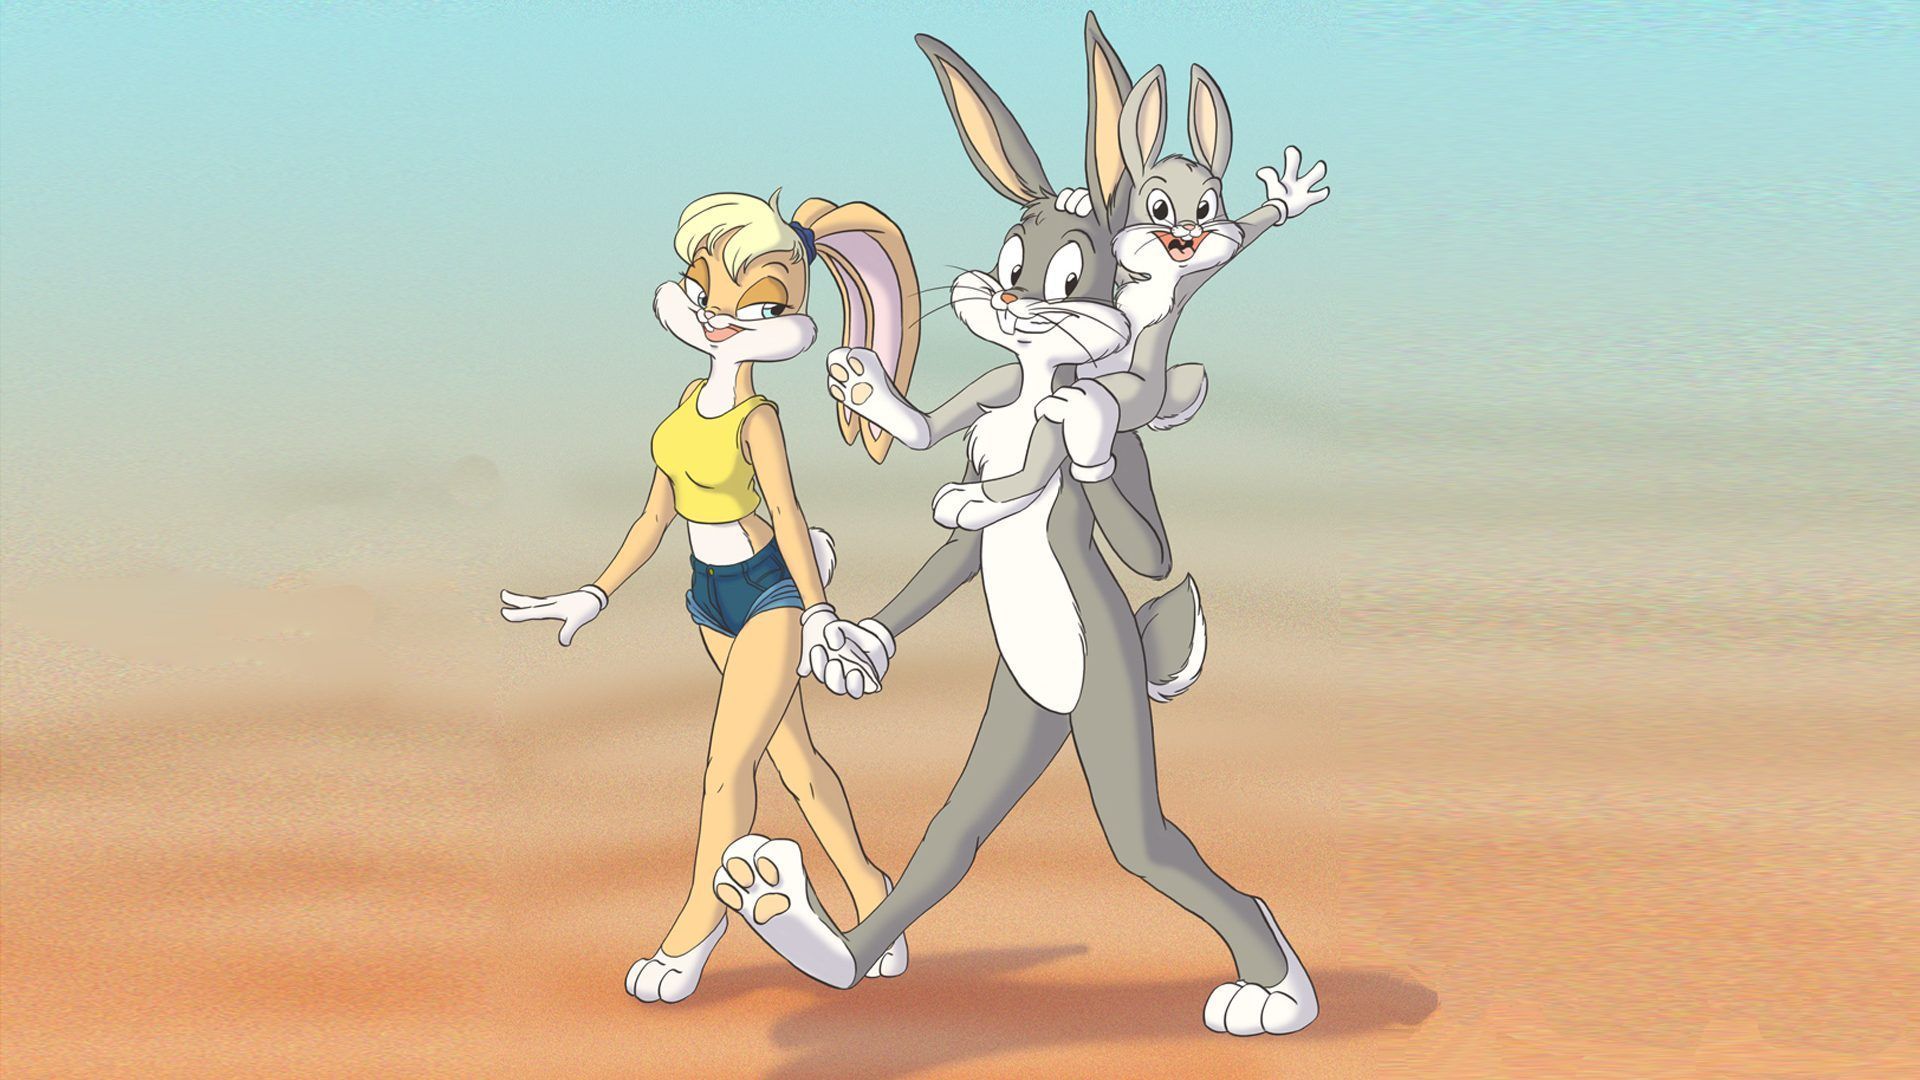 Bugs Bunny and Lola Bunny walking on the beach - Bugs Bunny